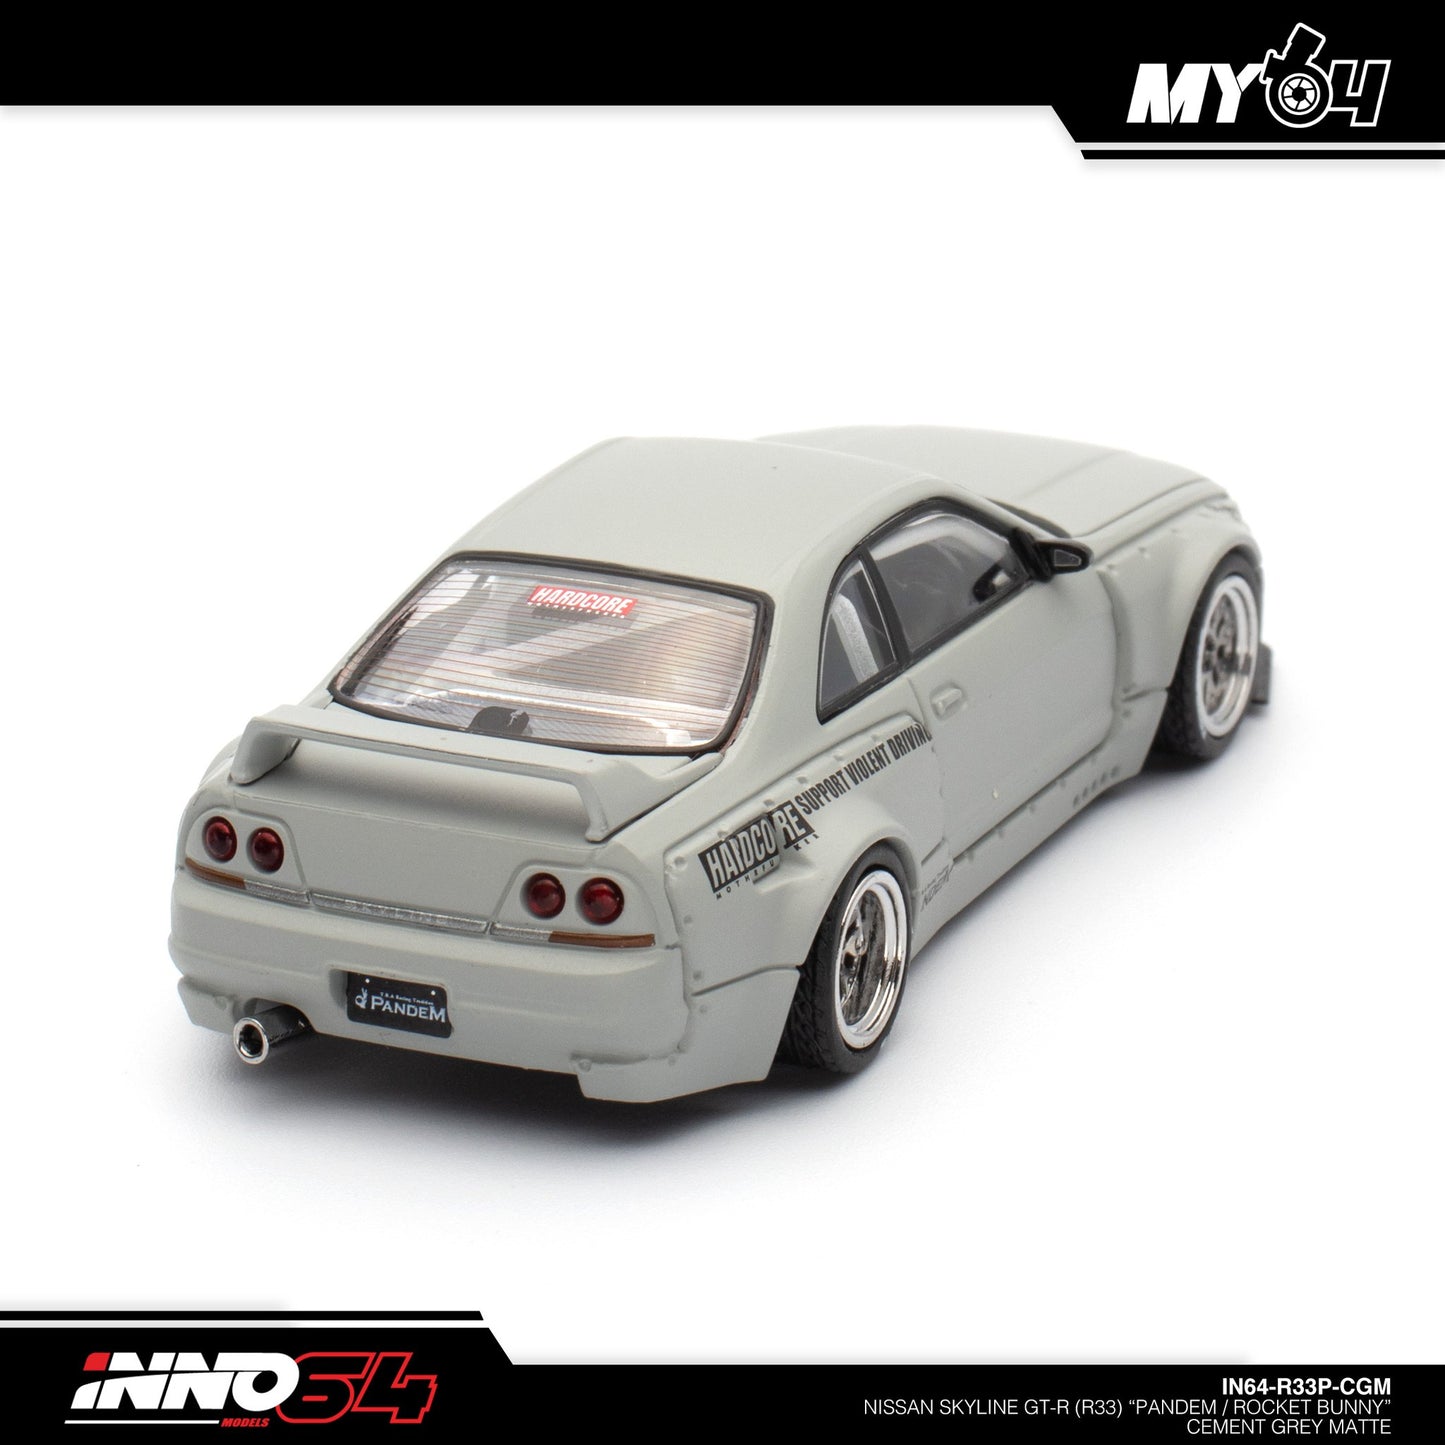 [INNO64] Nissan Skyline GT-R (R33) "Pandem / Rocket Bunny" - Cement Grey Matte